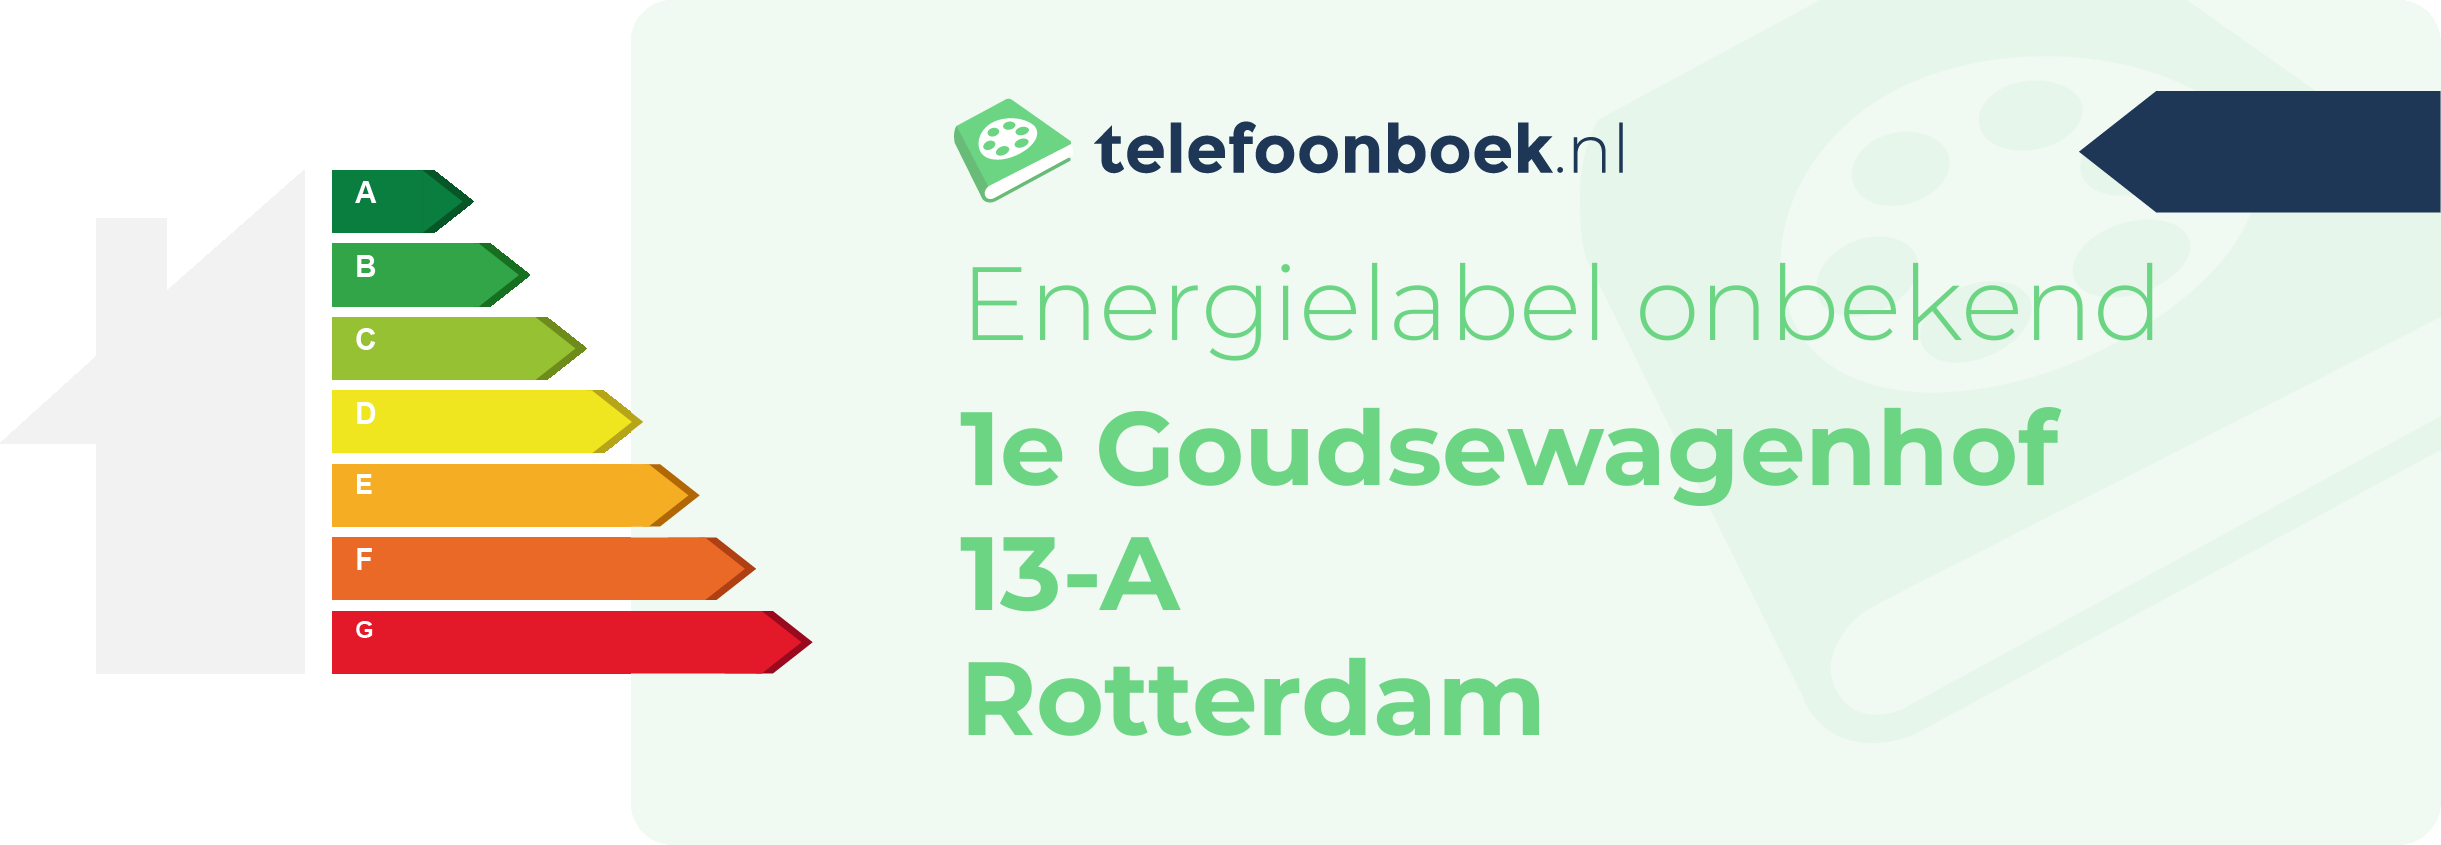 Energielabel 1e Goudsewagenhof 13-A Rotterdam